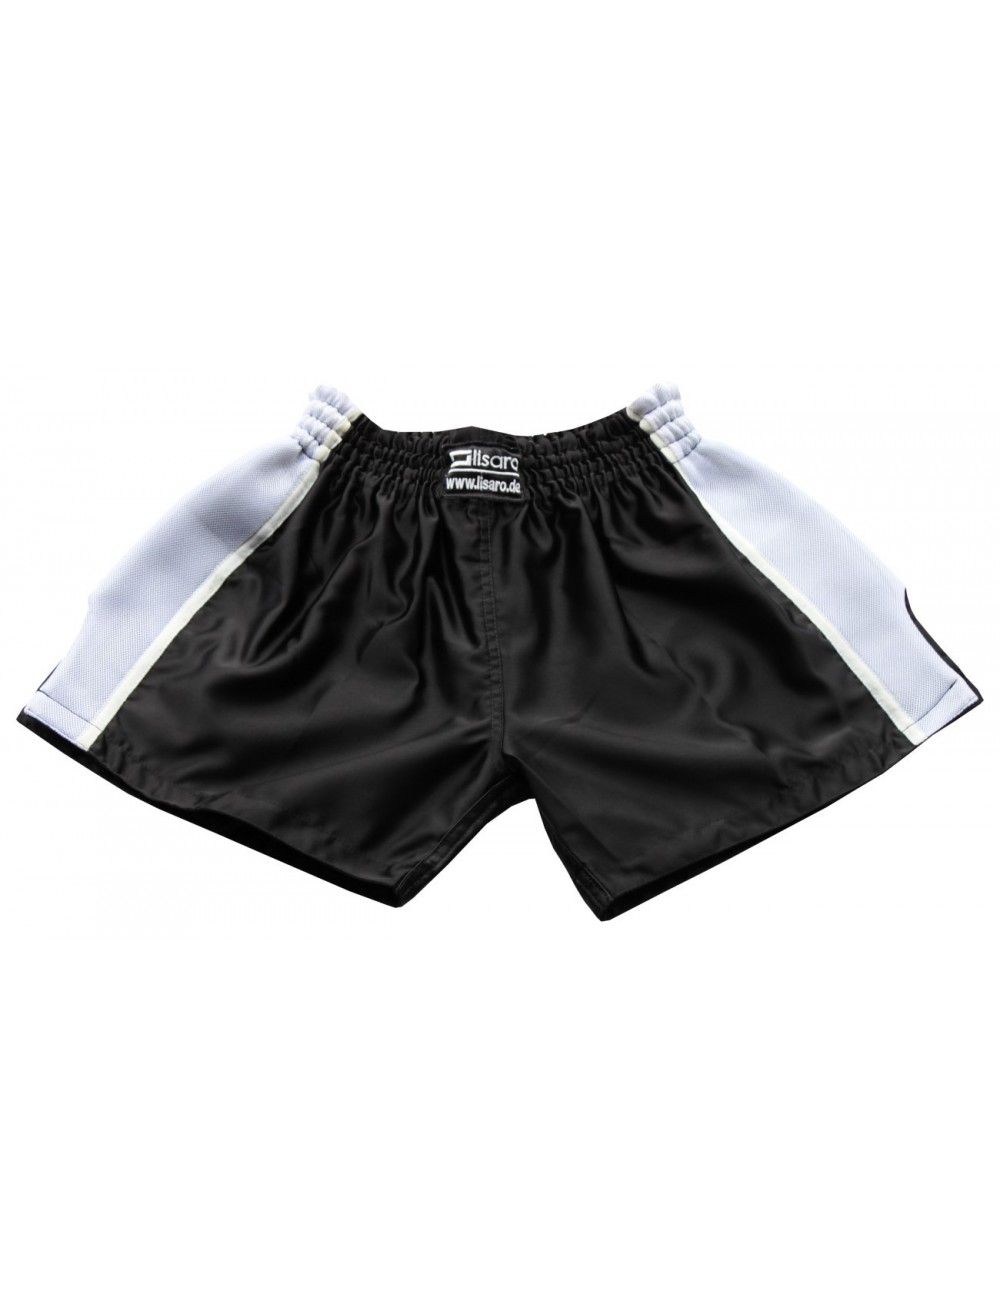 Thaiboxing Short, K-1 Shorts, Kickboxhose mit Satin Mesh in schwarz/weiß - 1